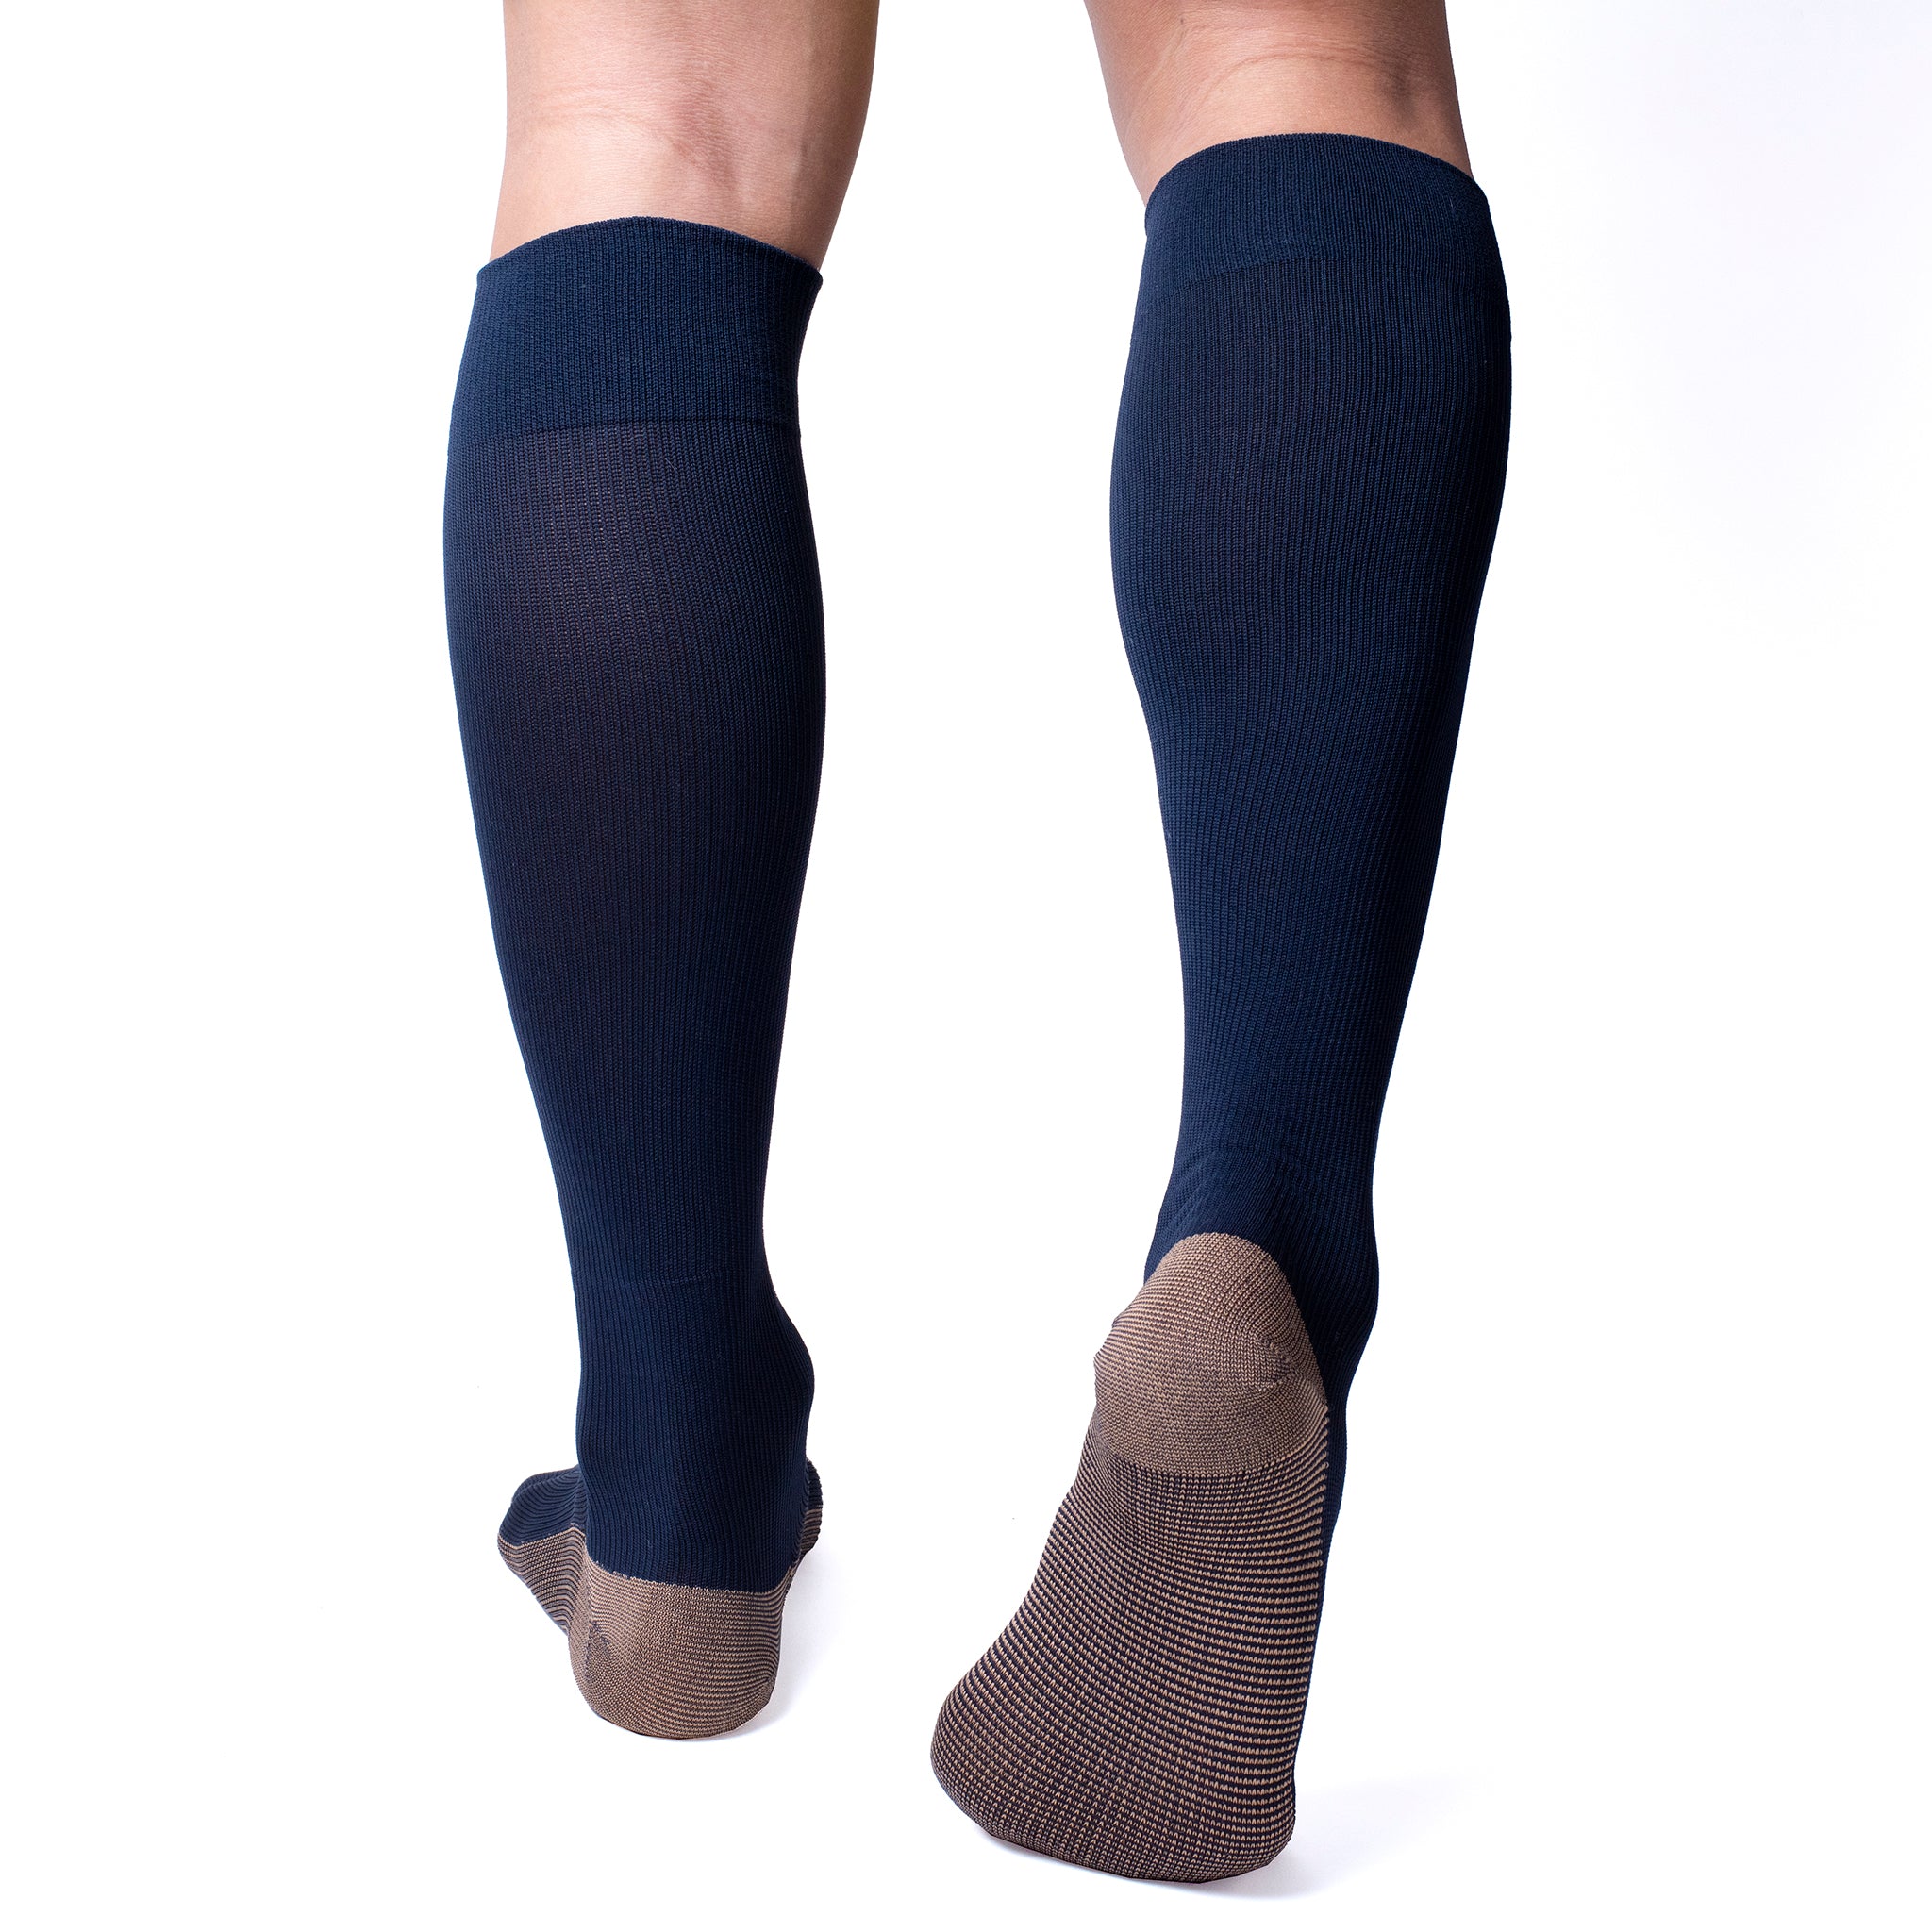 benefits of compression socks on knees